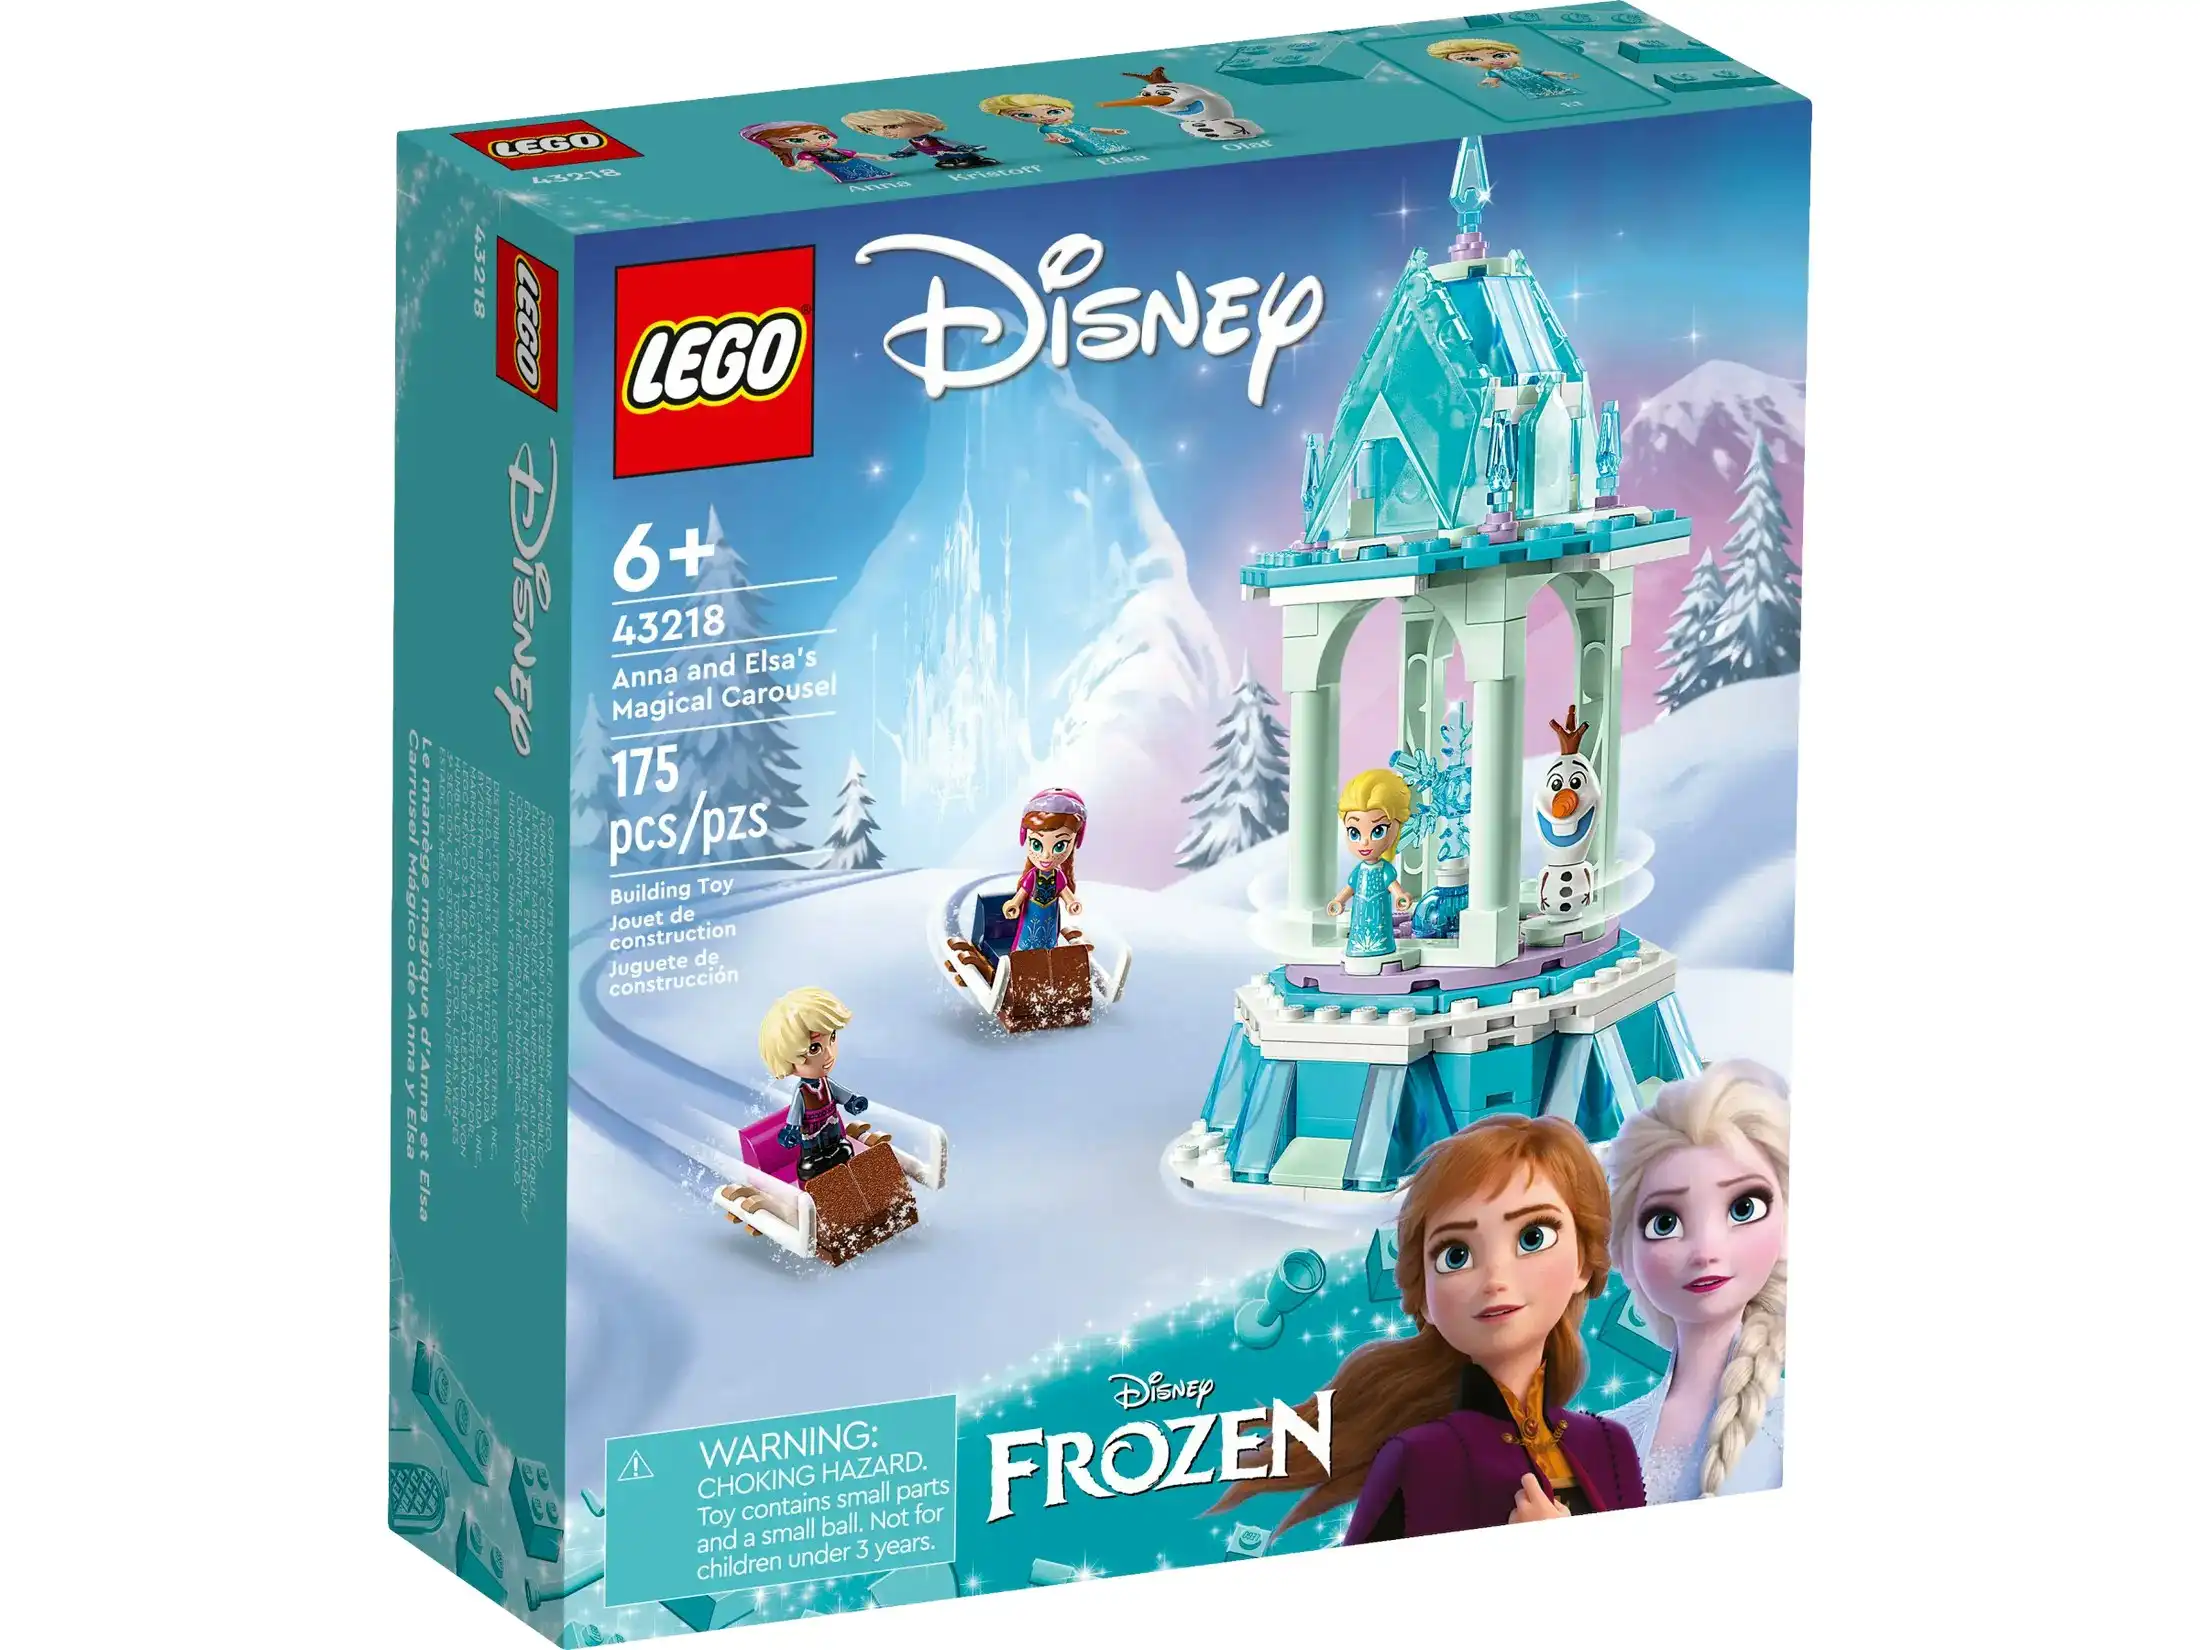 LEGO 43218 Anna and Elsa's Magical Carousel - Disney Princess